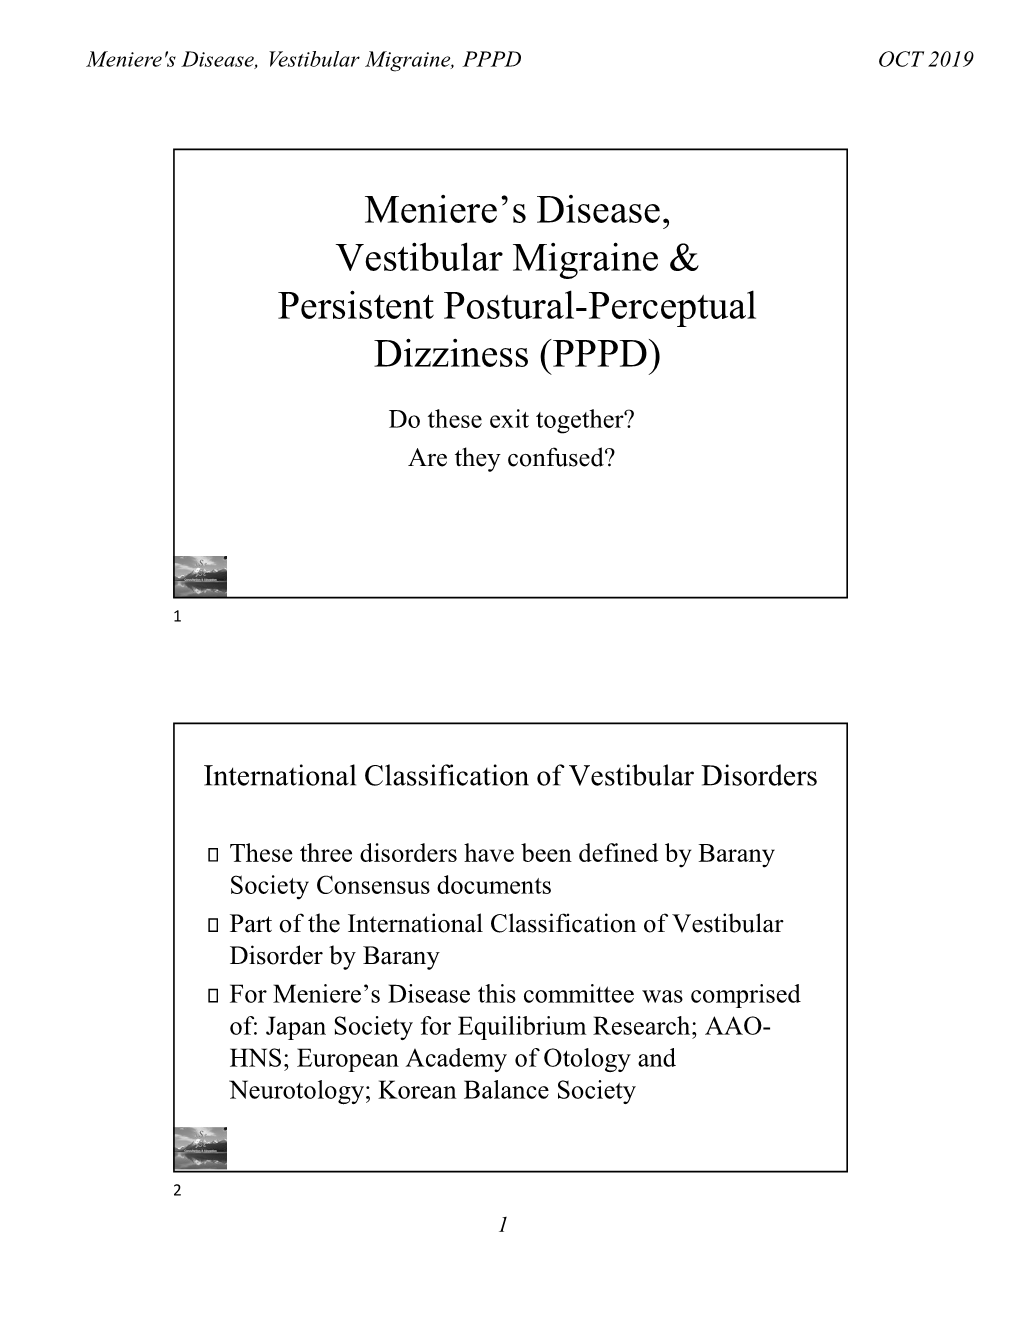 Meniere's Disease, Vestibular Migraine & Persistent Postural